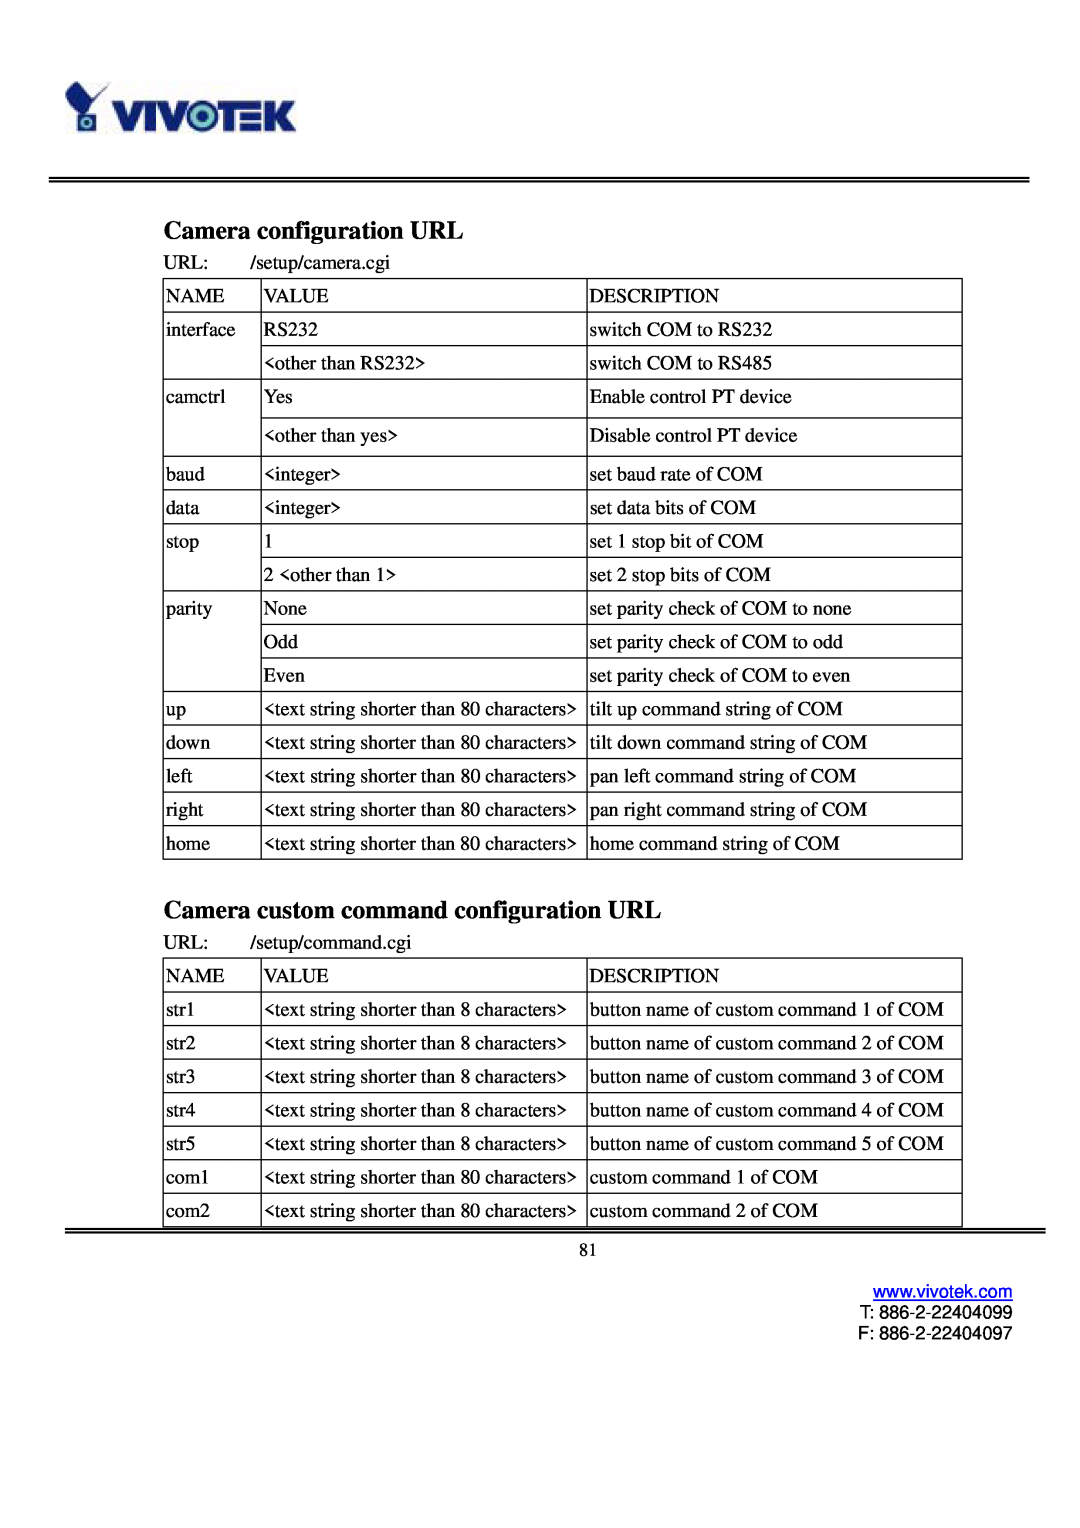 Vivotek IP3111/IP3121 user manual Camera configuration URL, Camera custom command configuration URL 